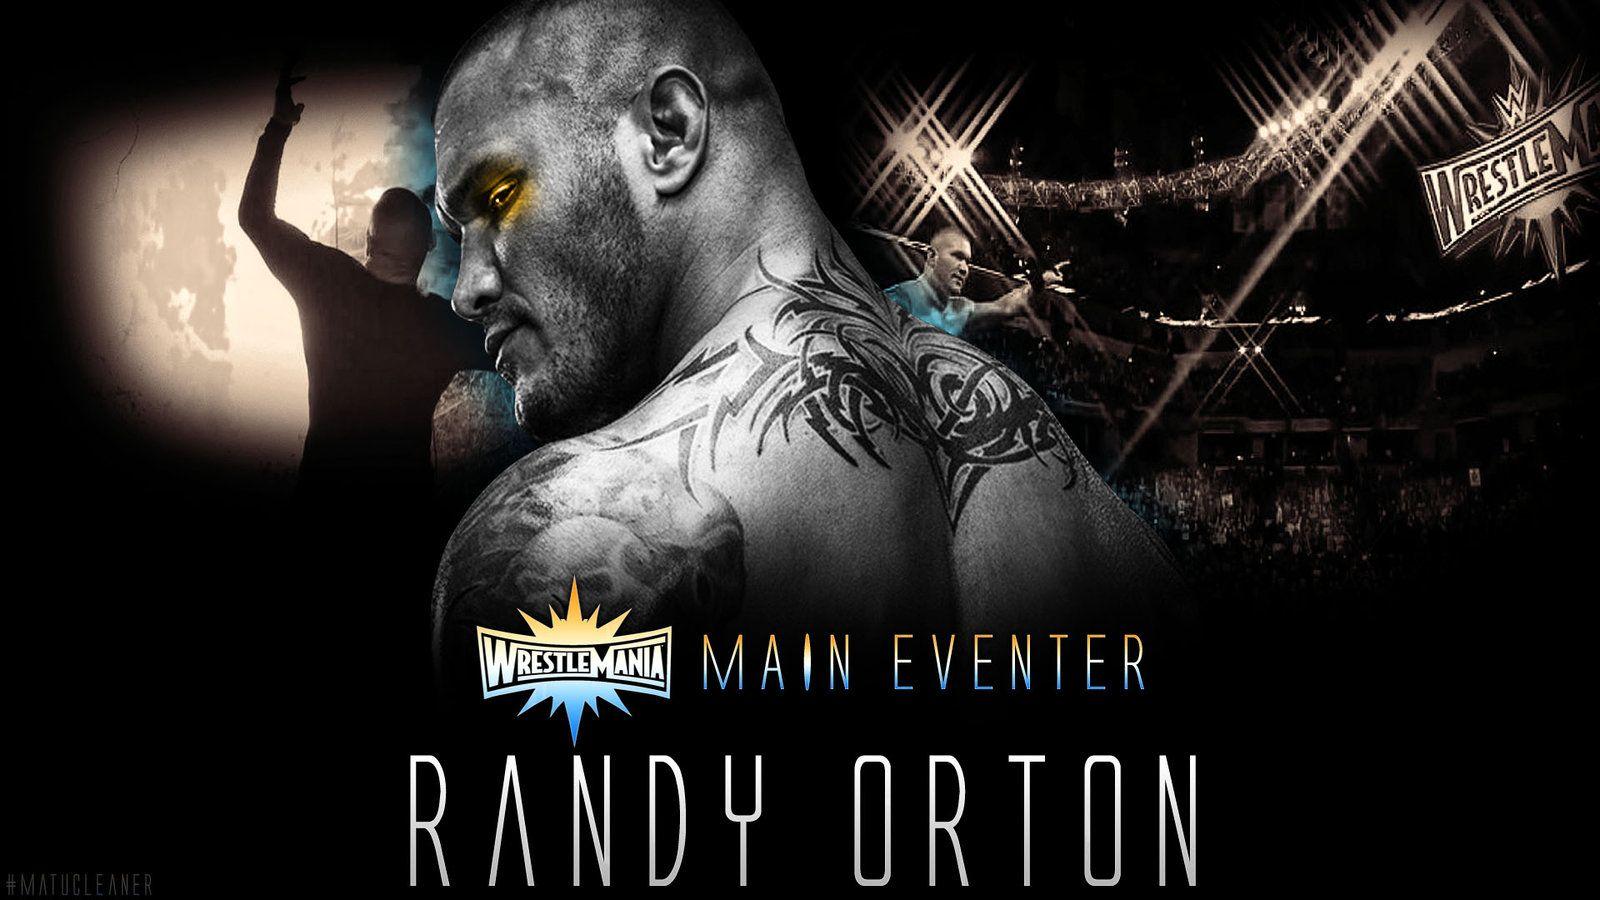 Randy Orton HD Image 7 #RandyOrtonHDimage #RandyOrton